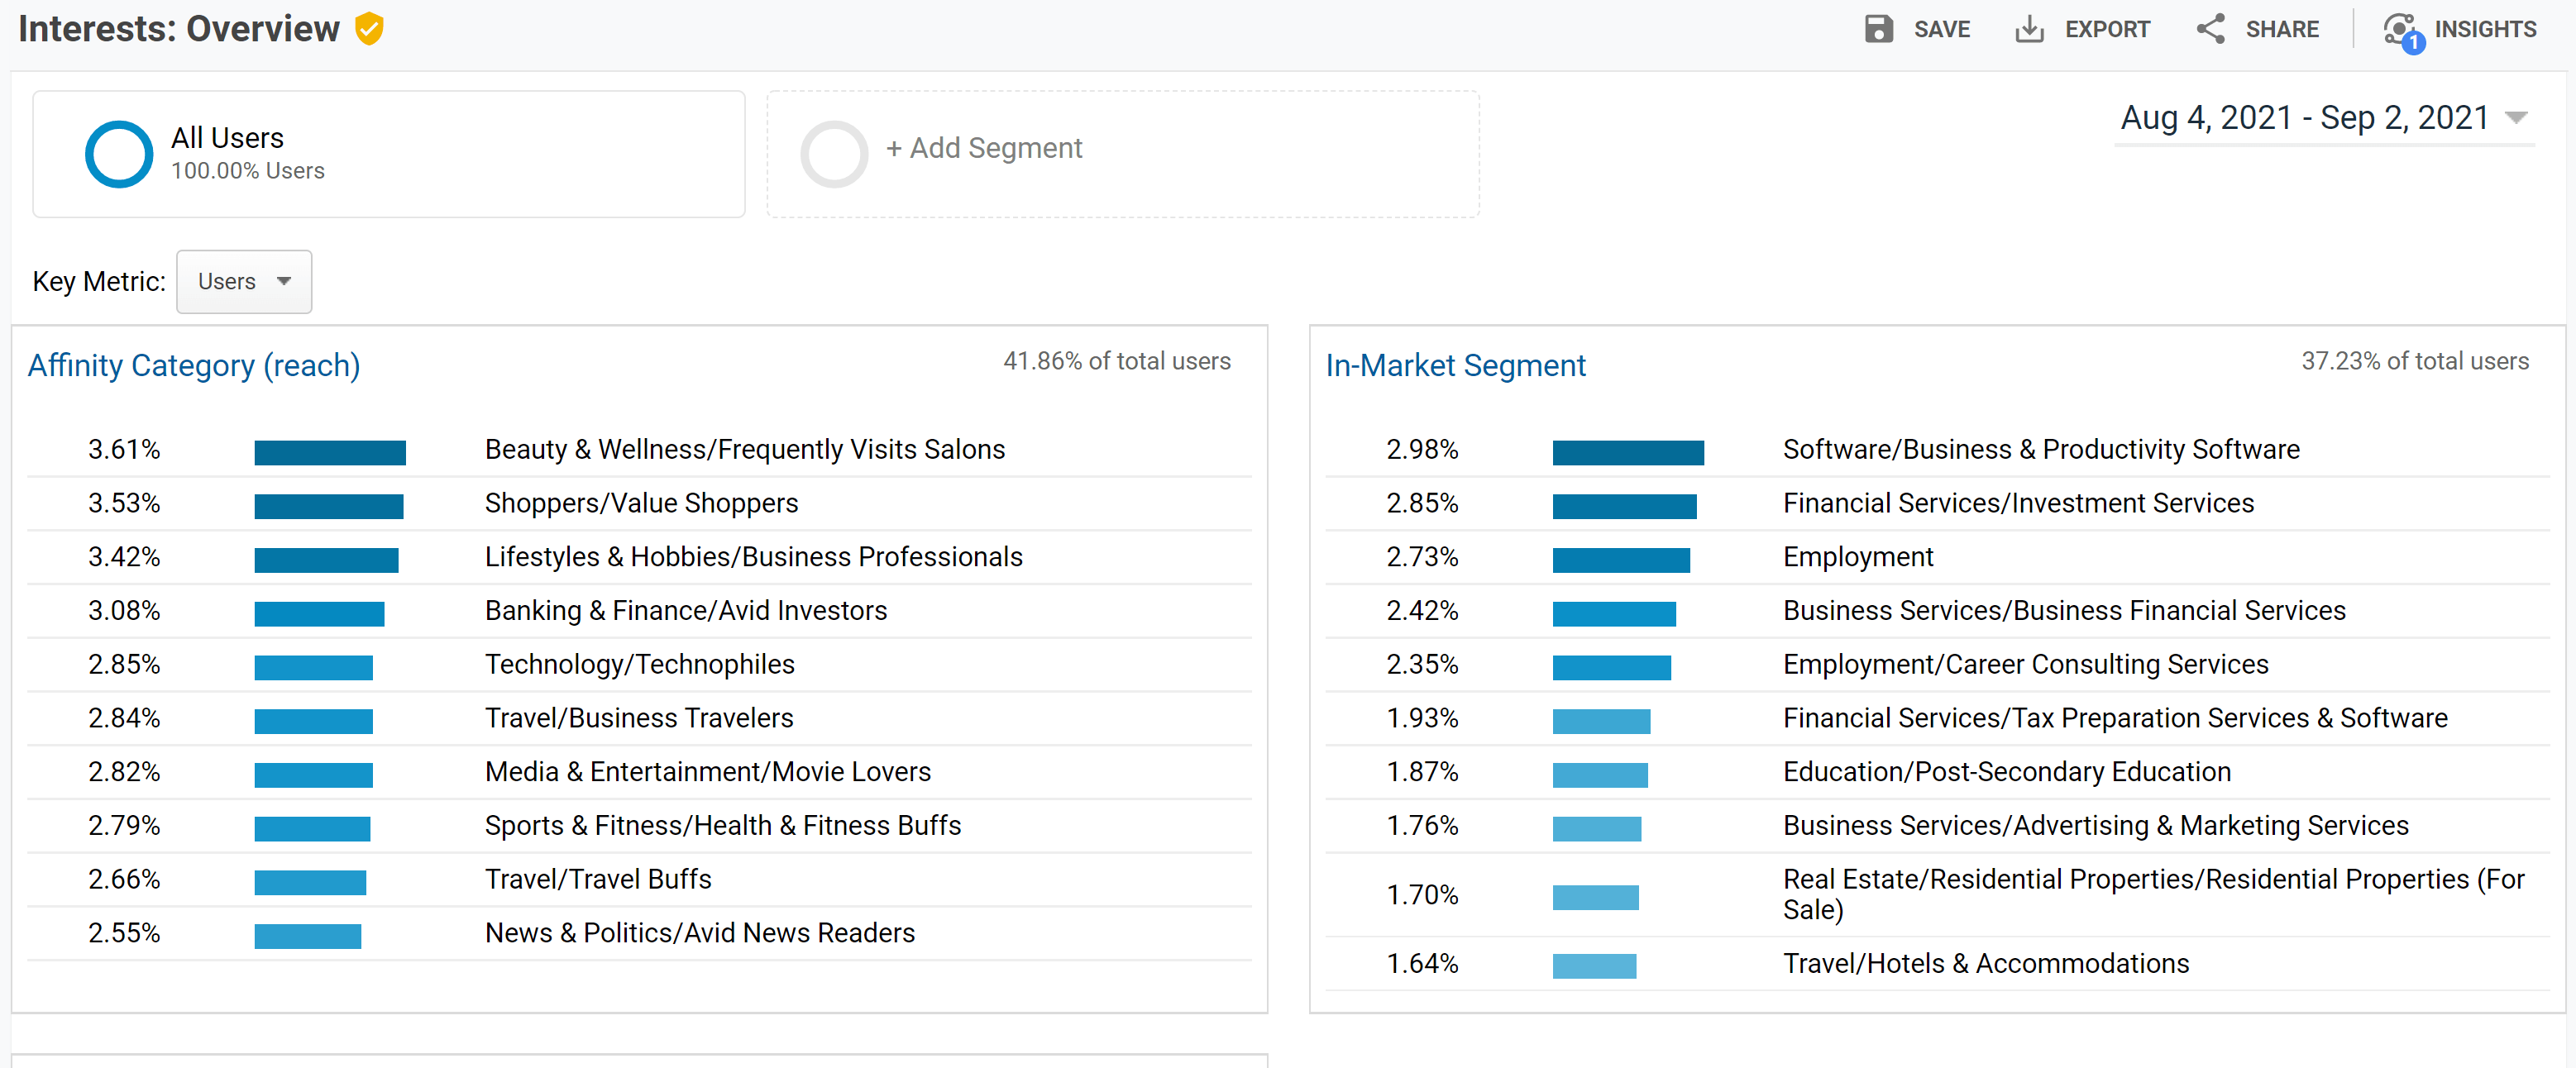 Google Analytics interests overview